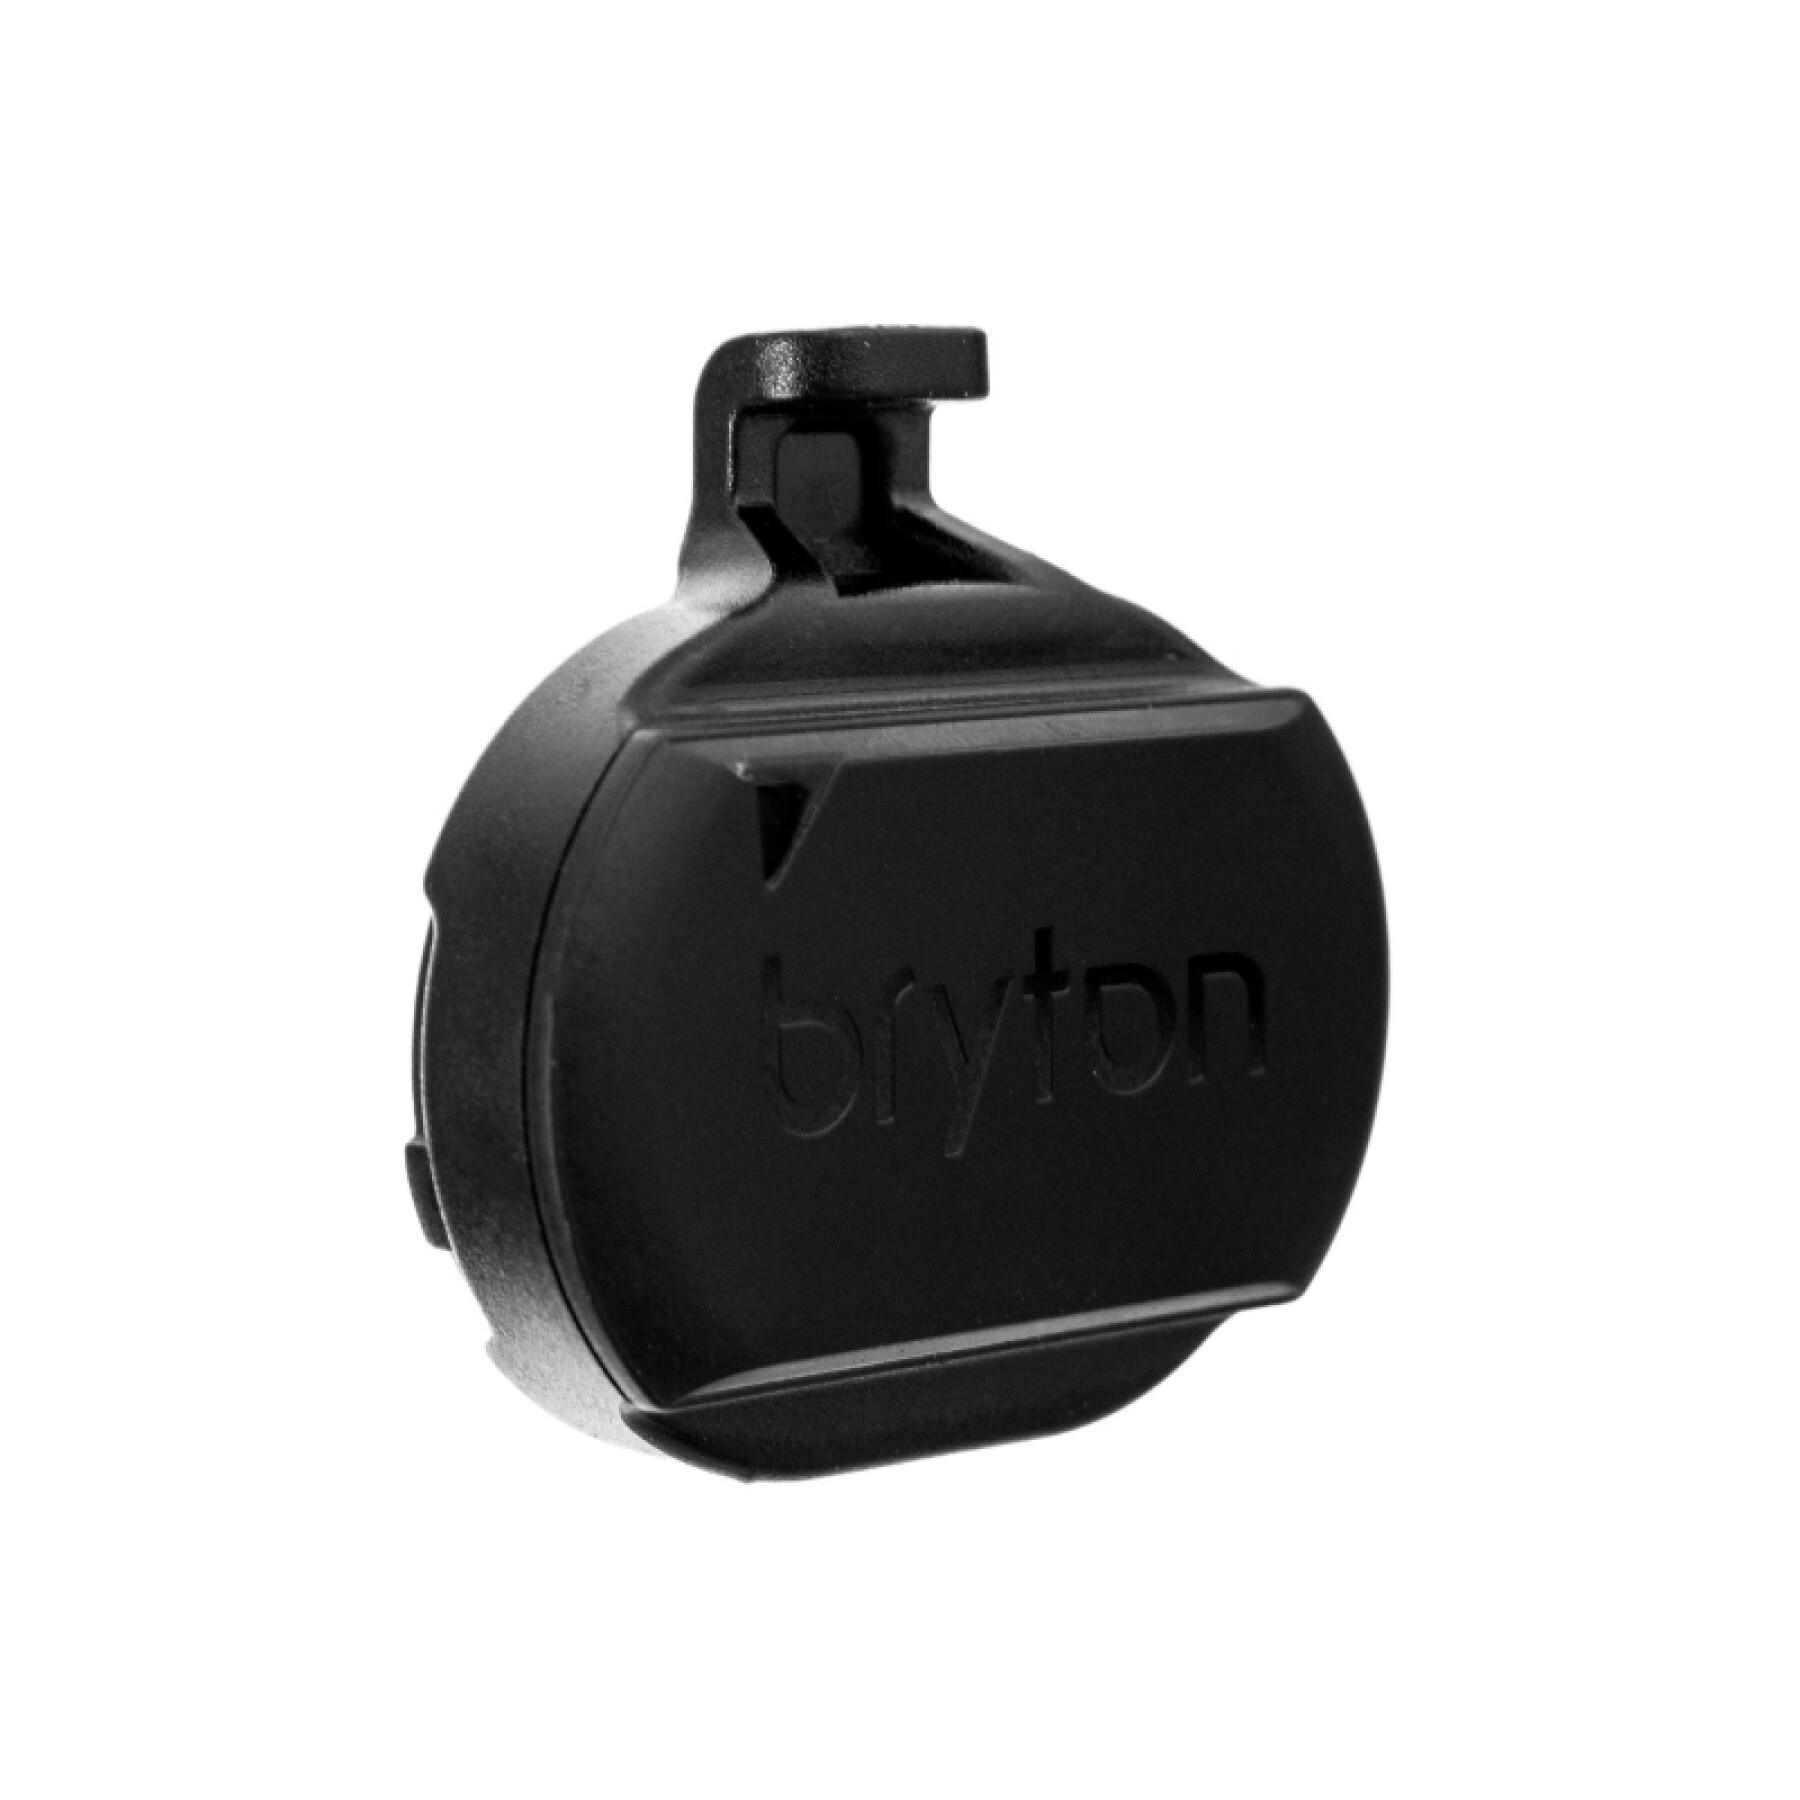 Speed sensor Bryton bt & ant+